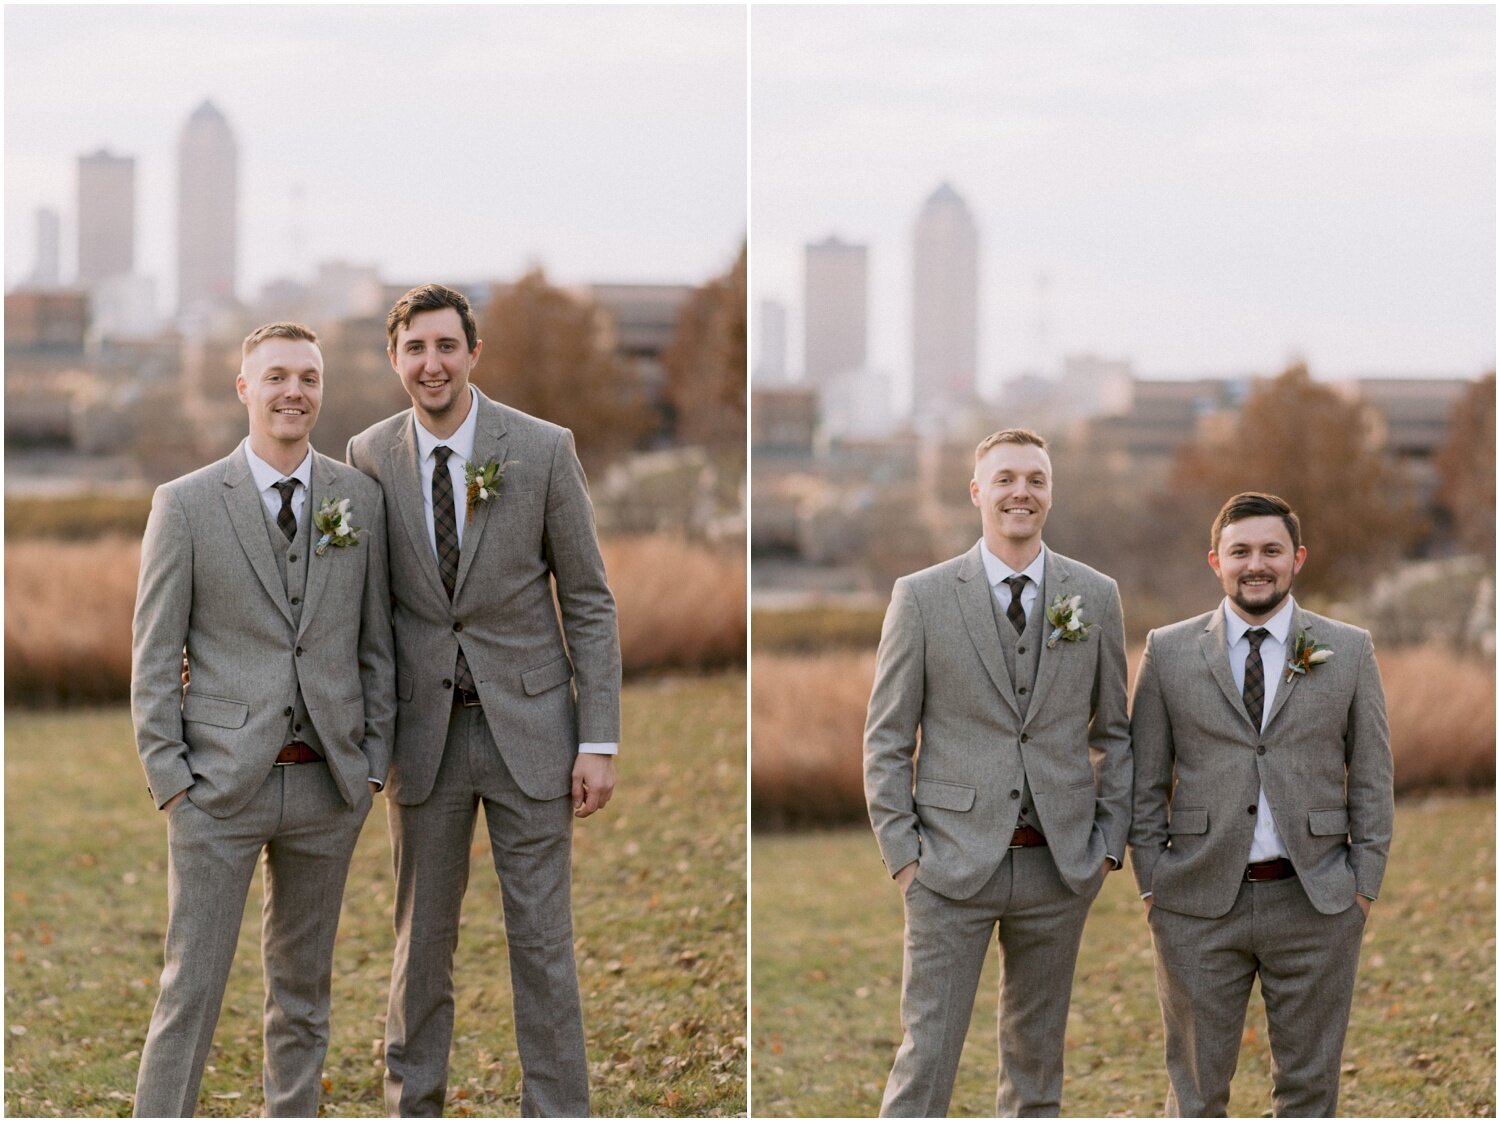 Andrew Ferren Photography - Des Moines Iowa Wedding Photographer - Destination - Engagement - Videography - Videographer - The River Center53.jpg